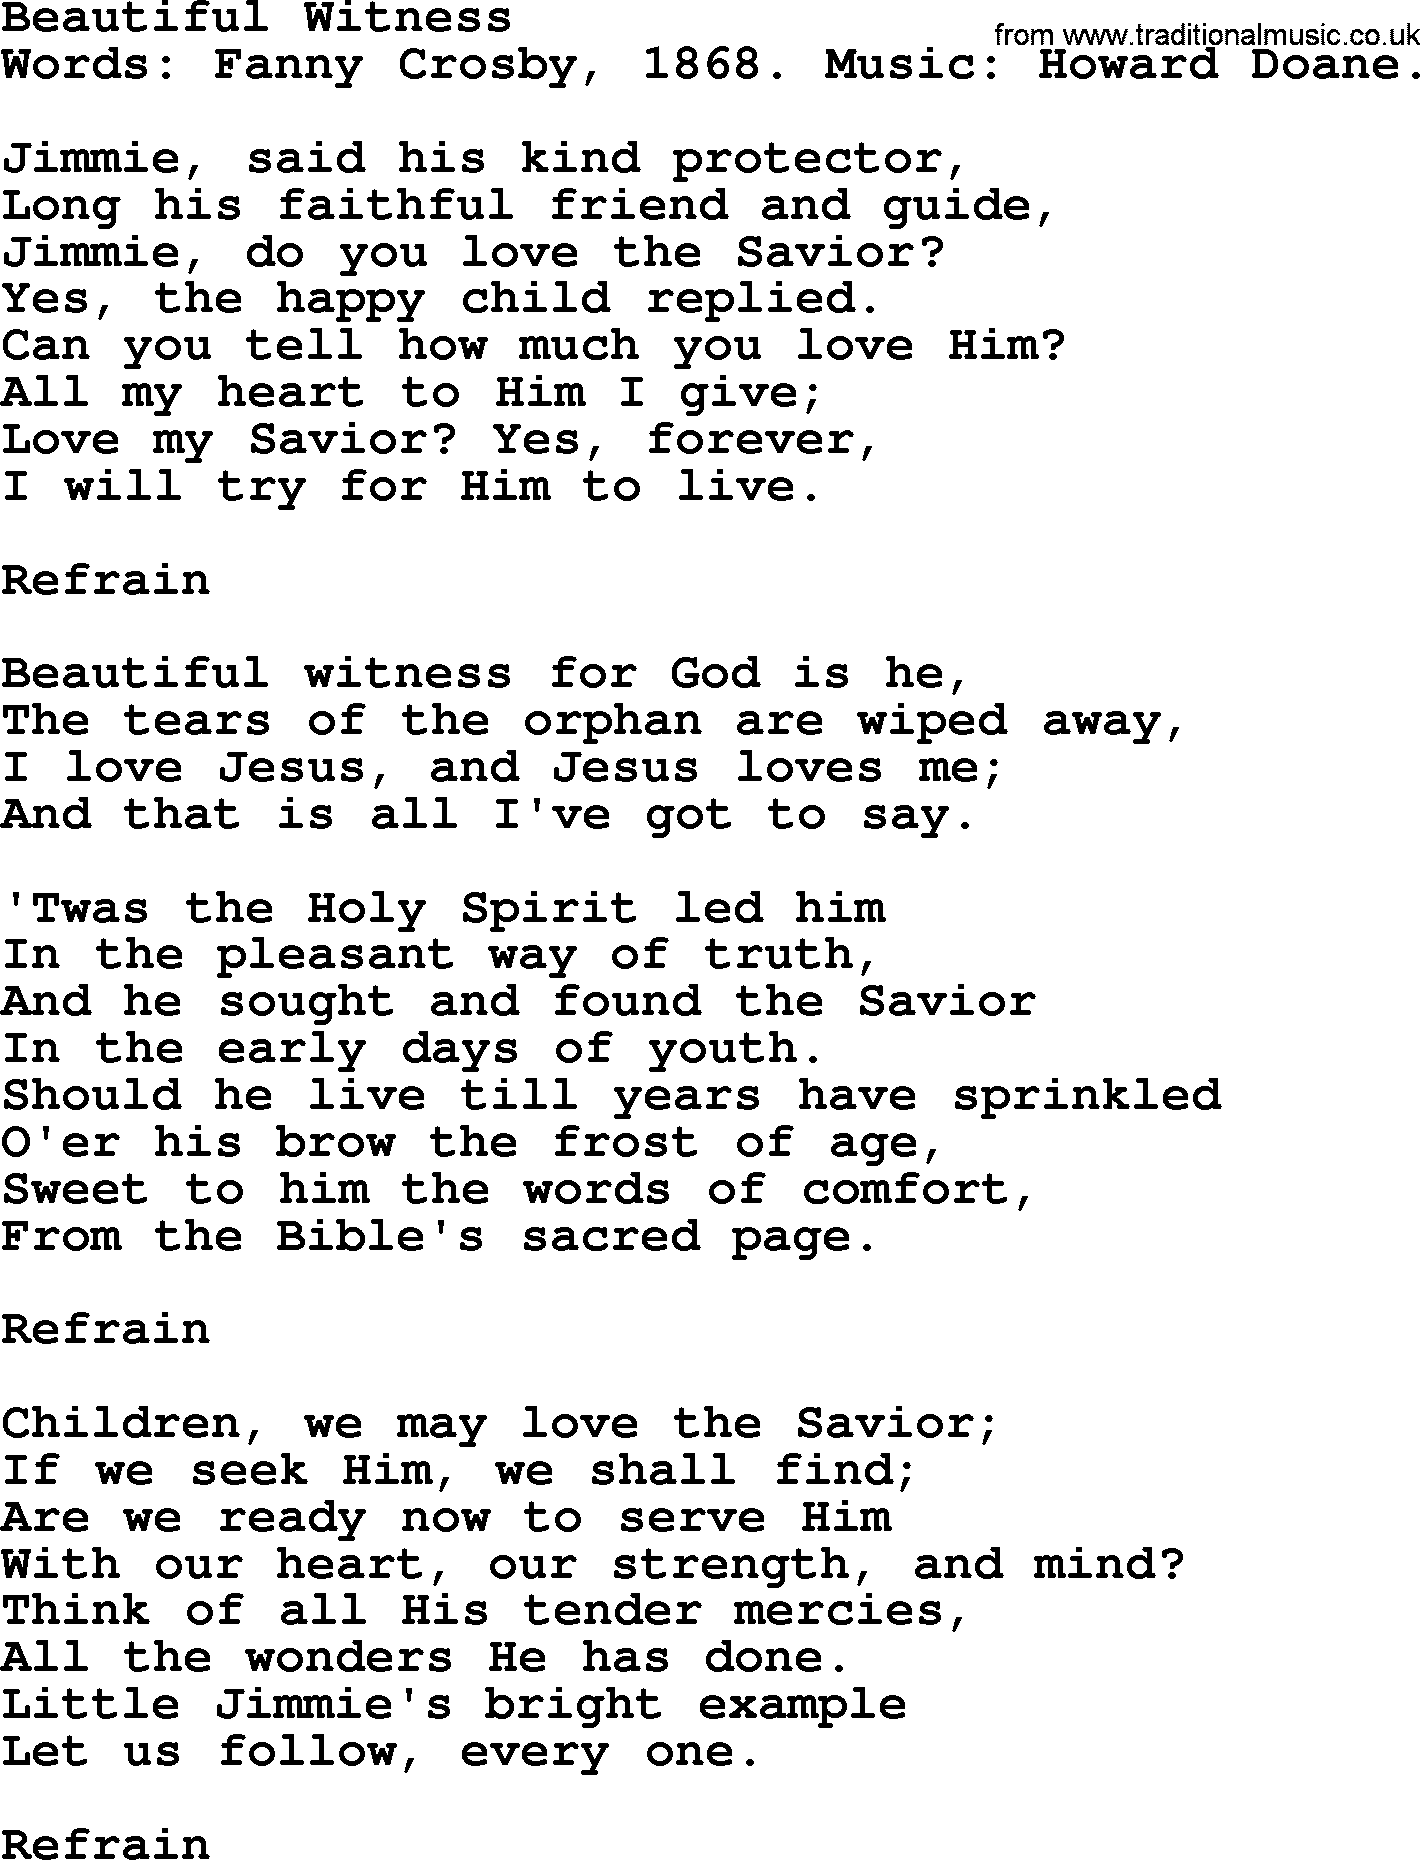 Fanny Crosby song: Beautiful Witness, lyrics